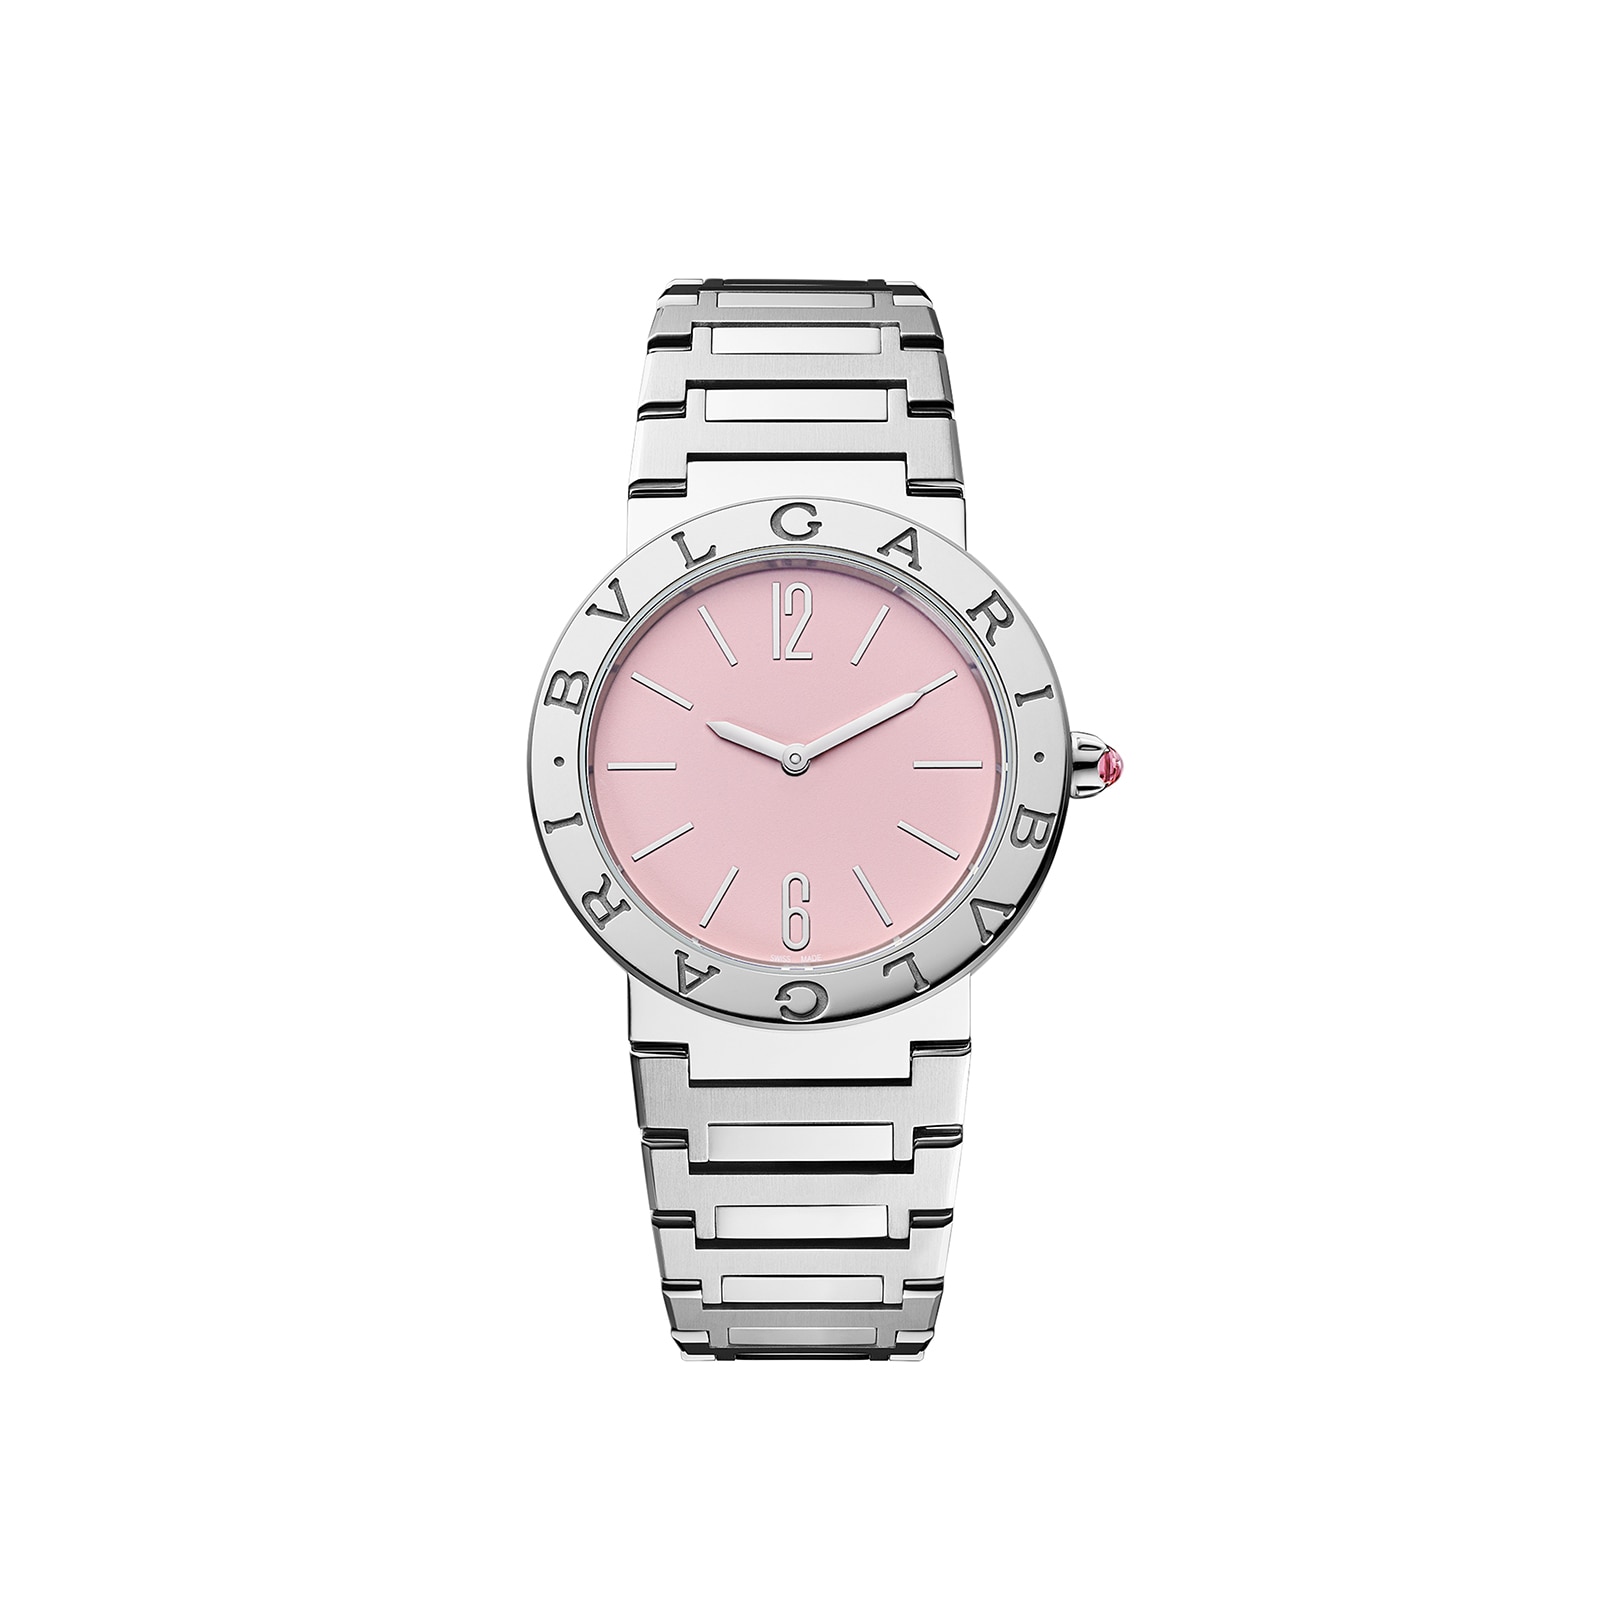 Stainless Steel Bvlgari Bvlgari Limited Edition 33mm Pink Dial Ladies Watch